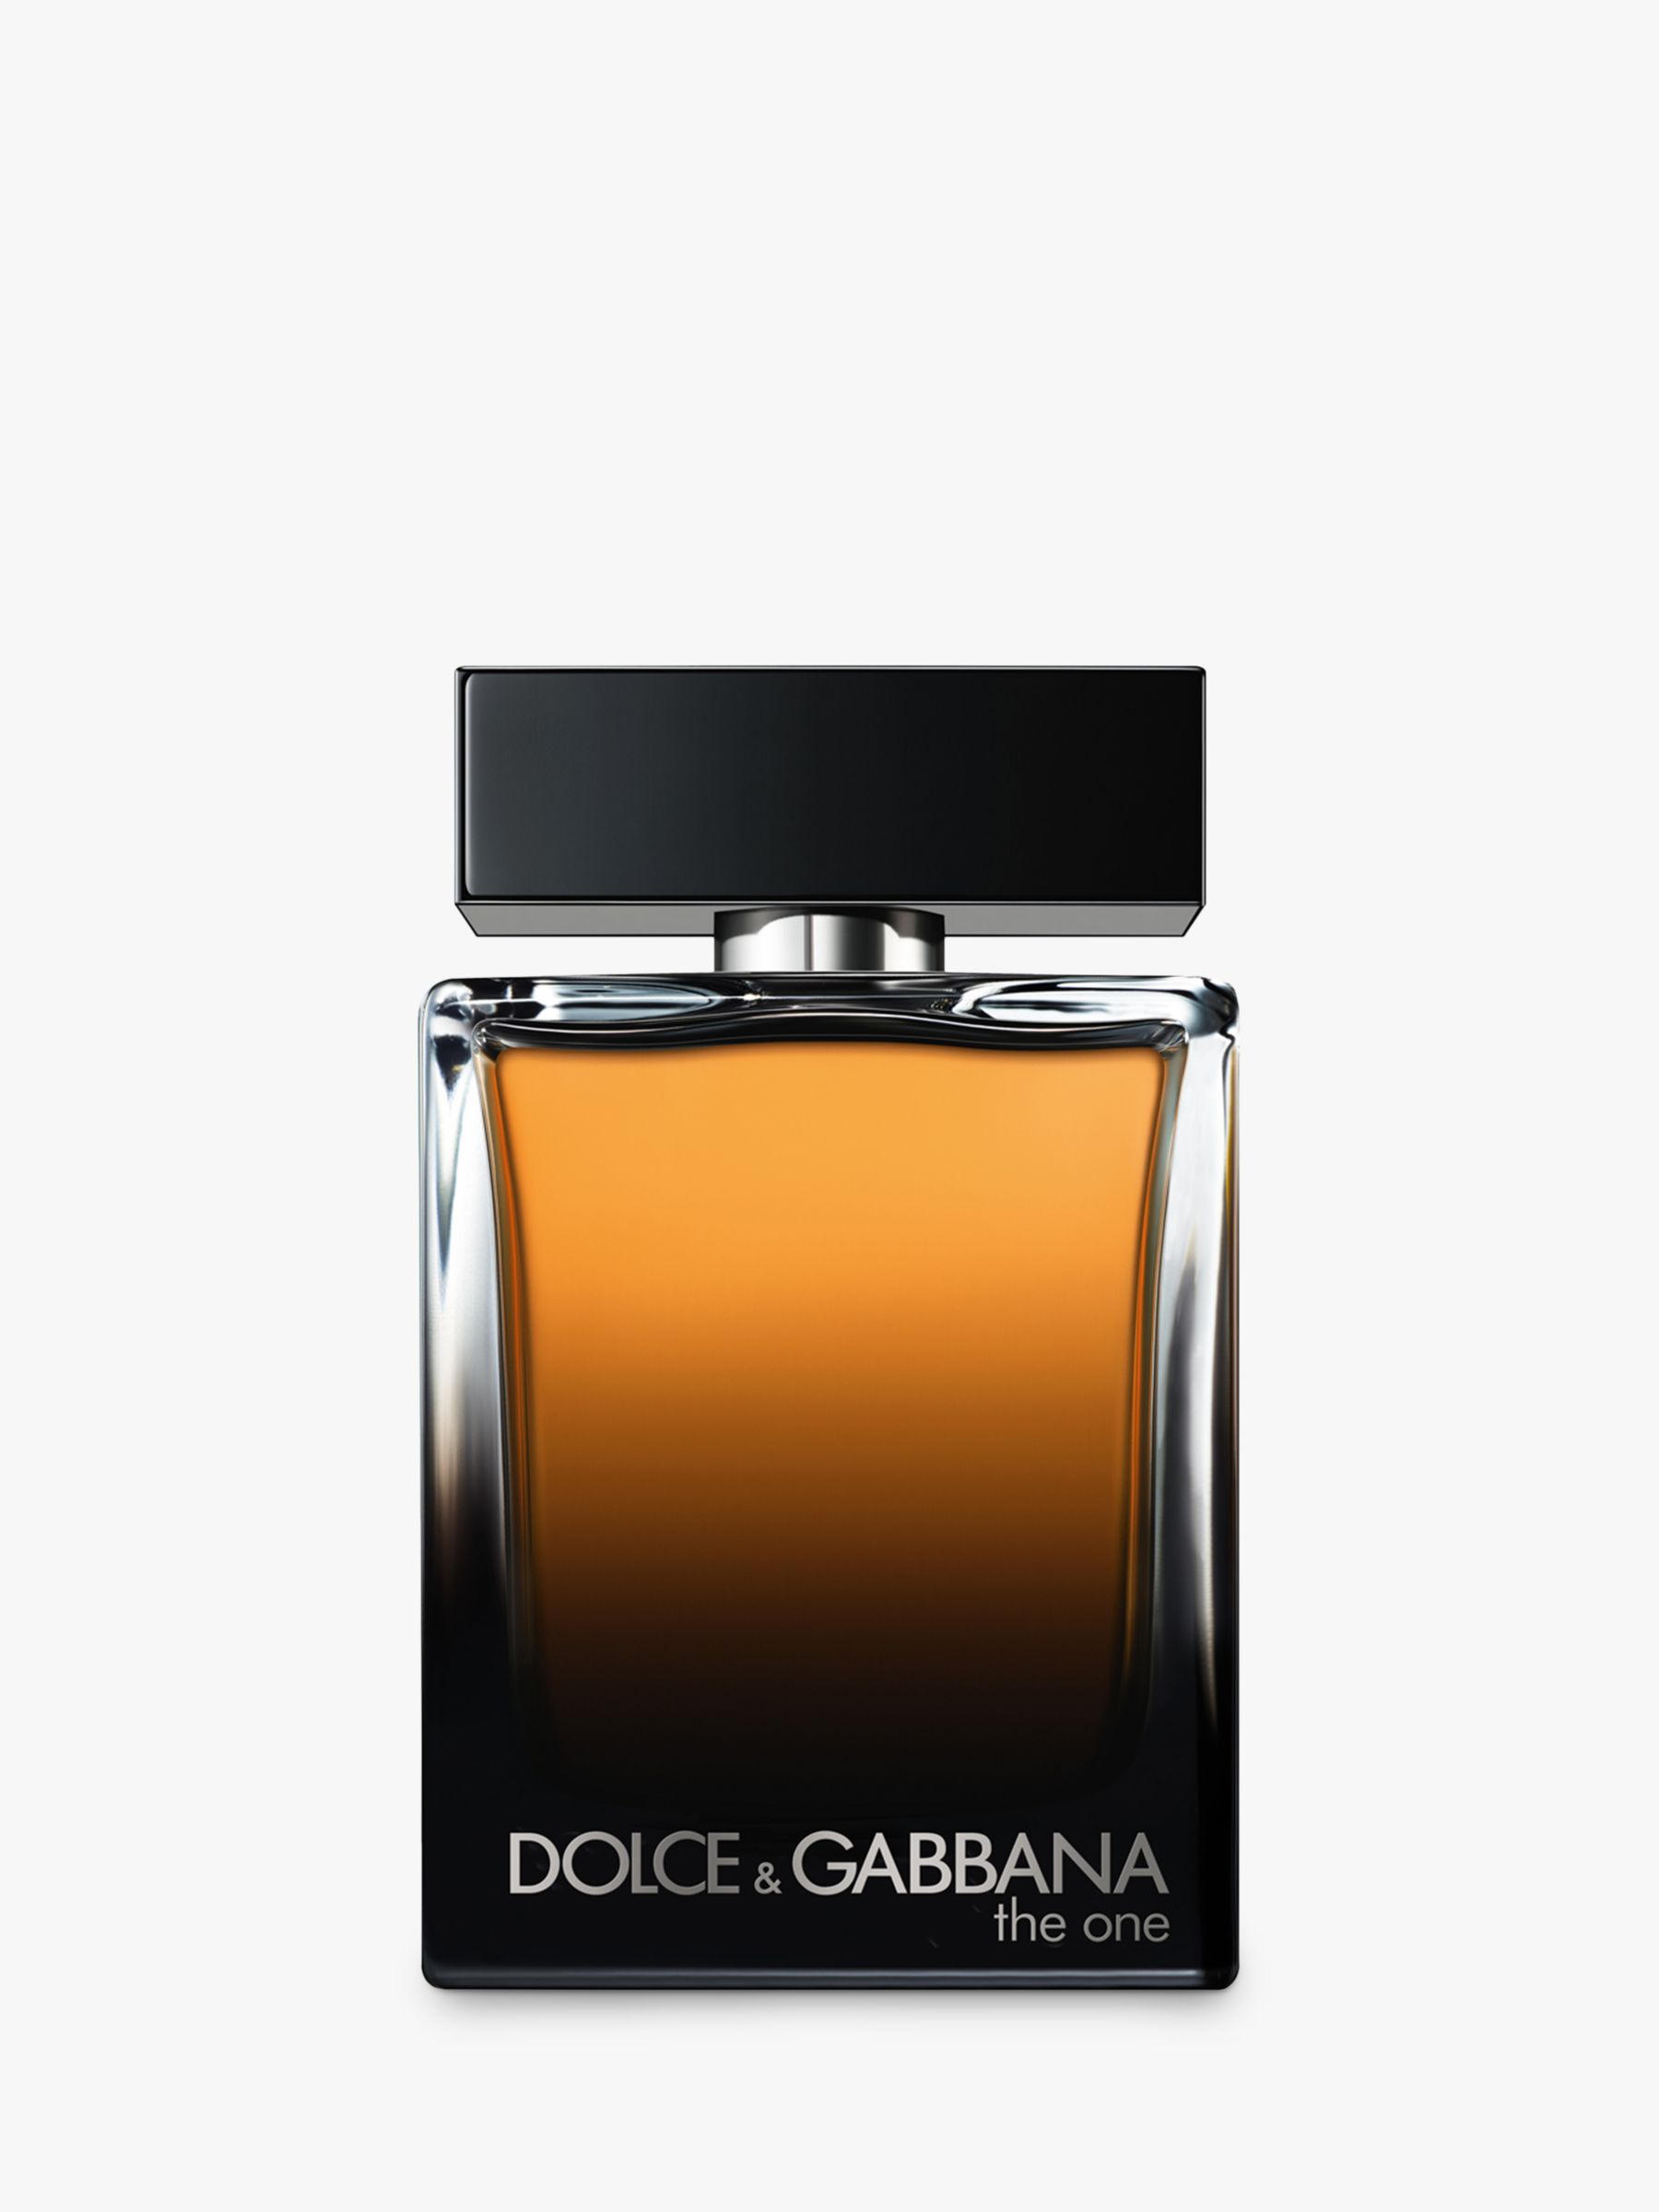 Dolce & Gabbana - The One | John Lewis & Partners